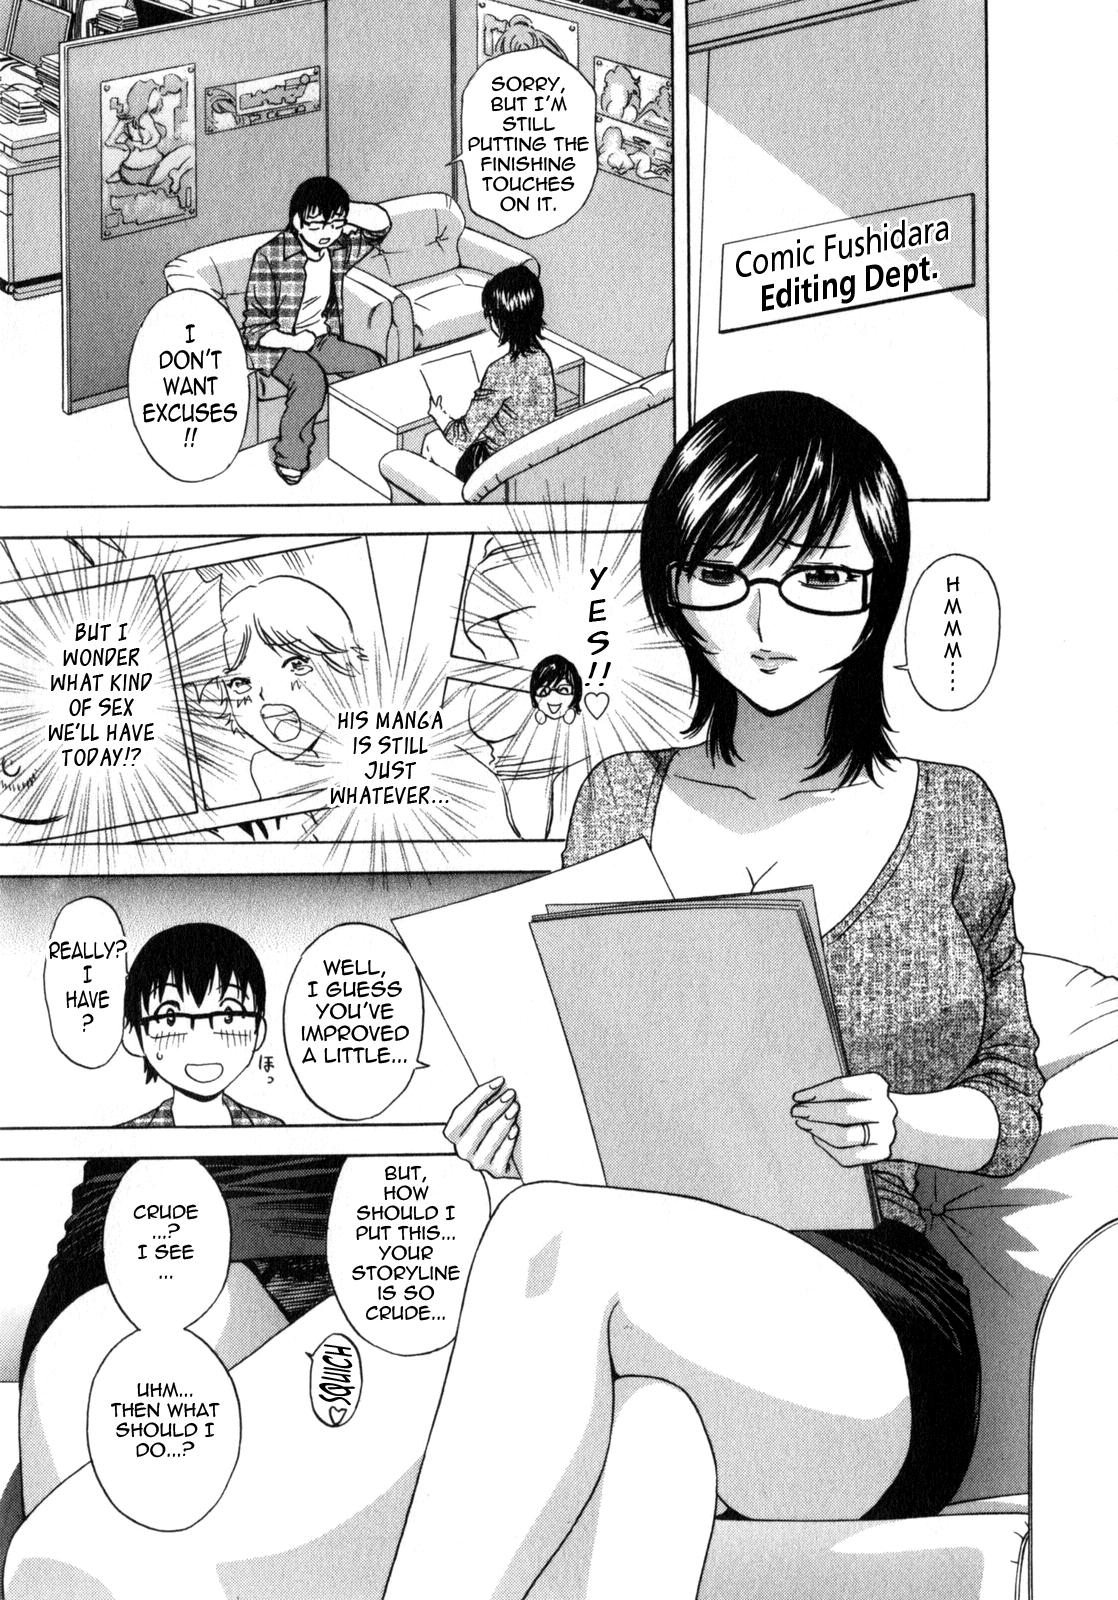 [Hidemaru] Life with Married Women Just Like a Manga 1 - Ch. 1-9 [English] {Tadanohito} 165